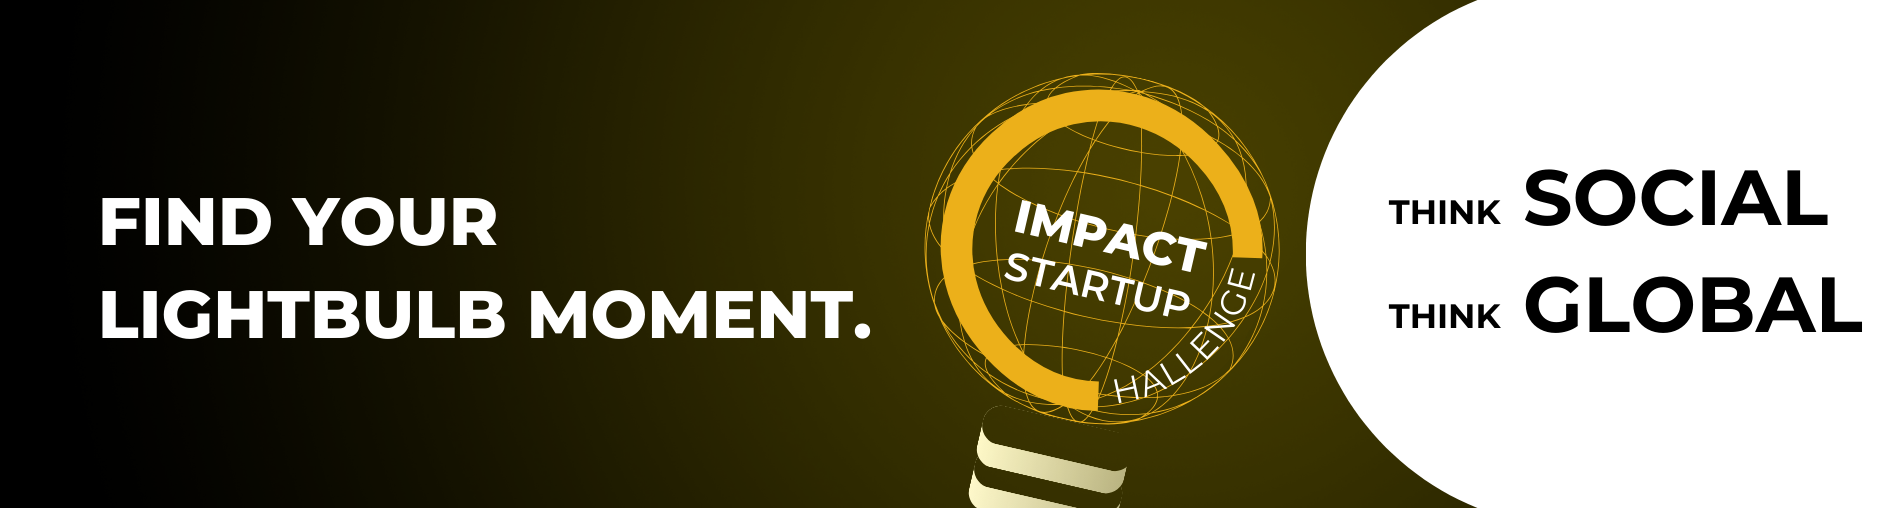 SSC EN - Impact Startup Challenge Banner